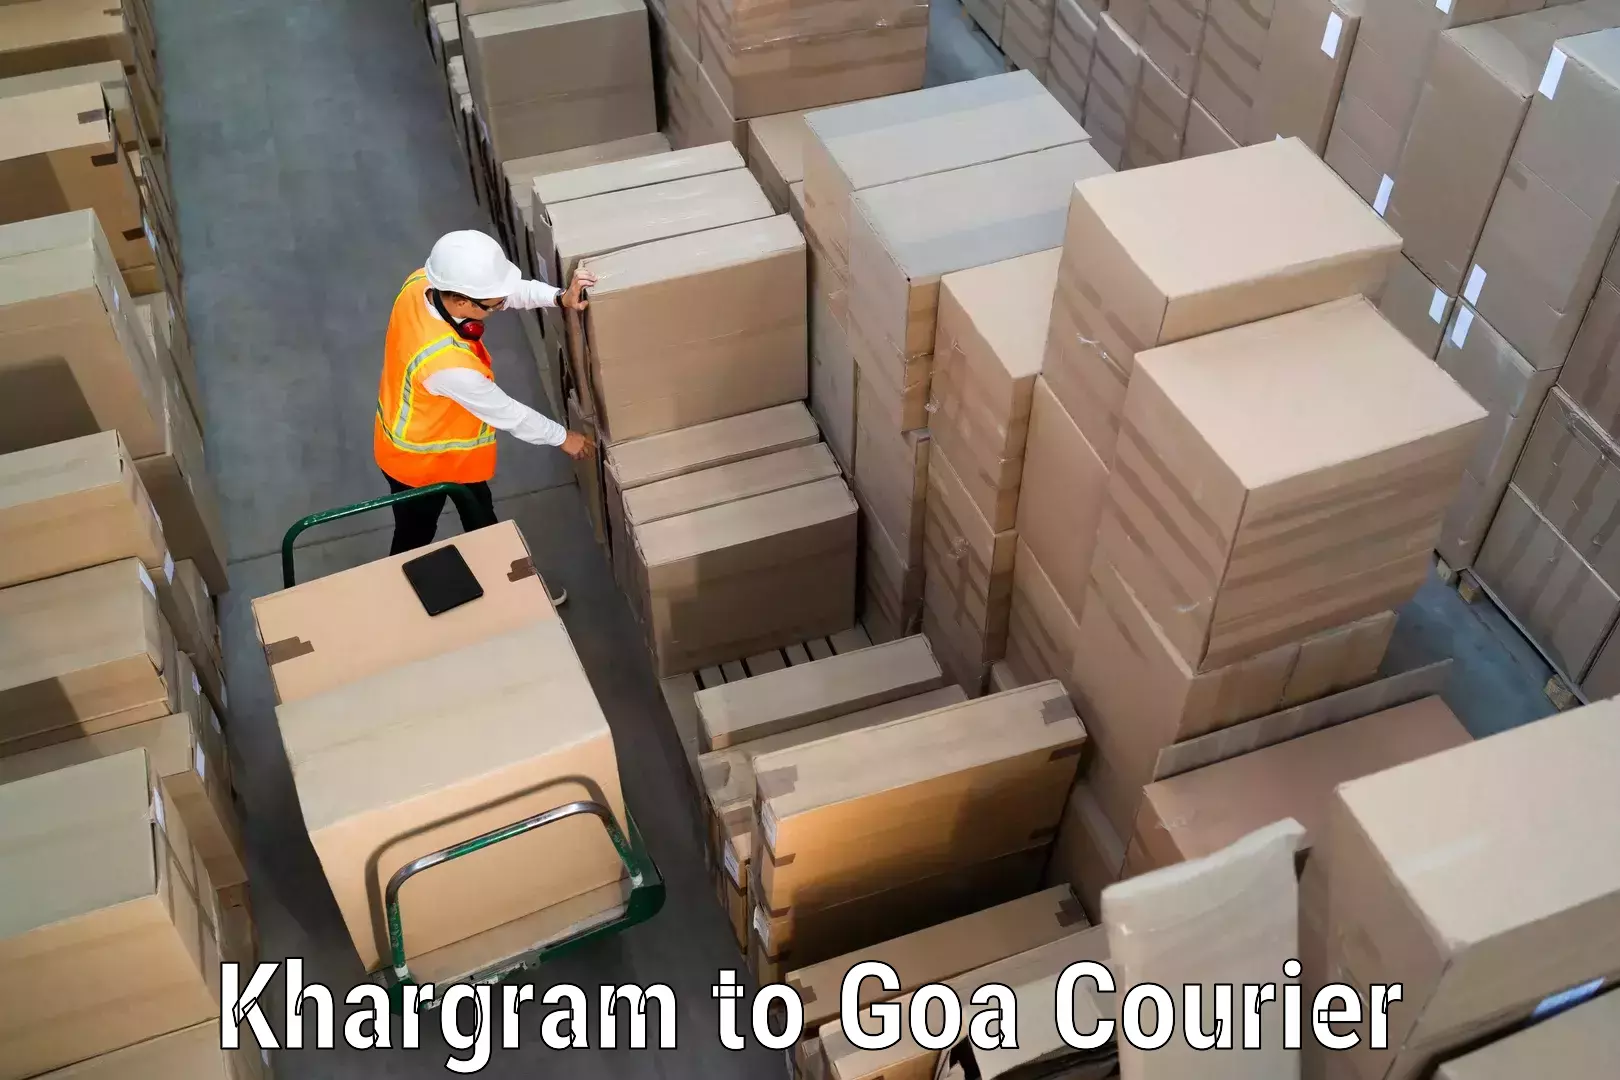 Seamless shipping experience Khargram to Goa